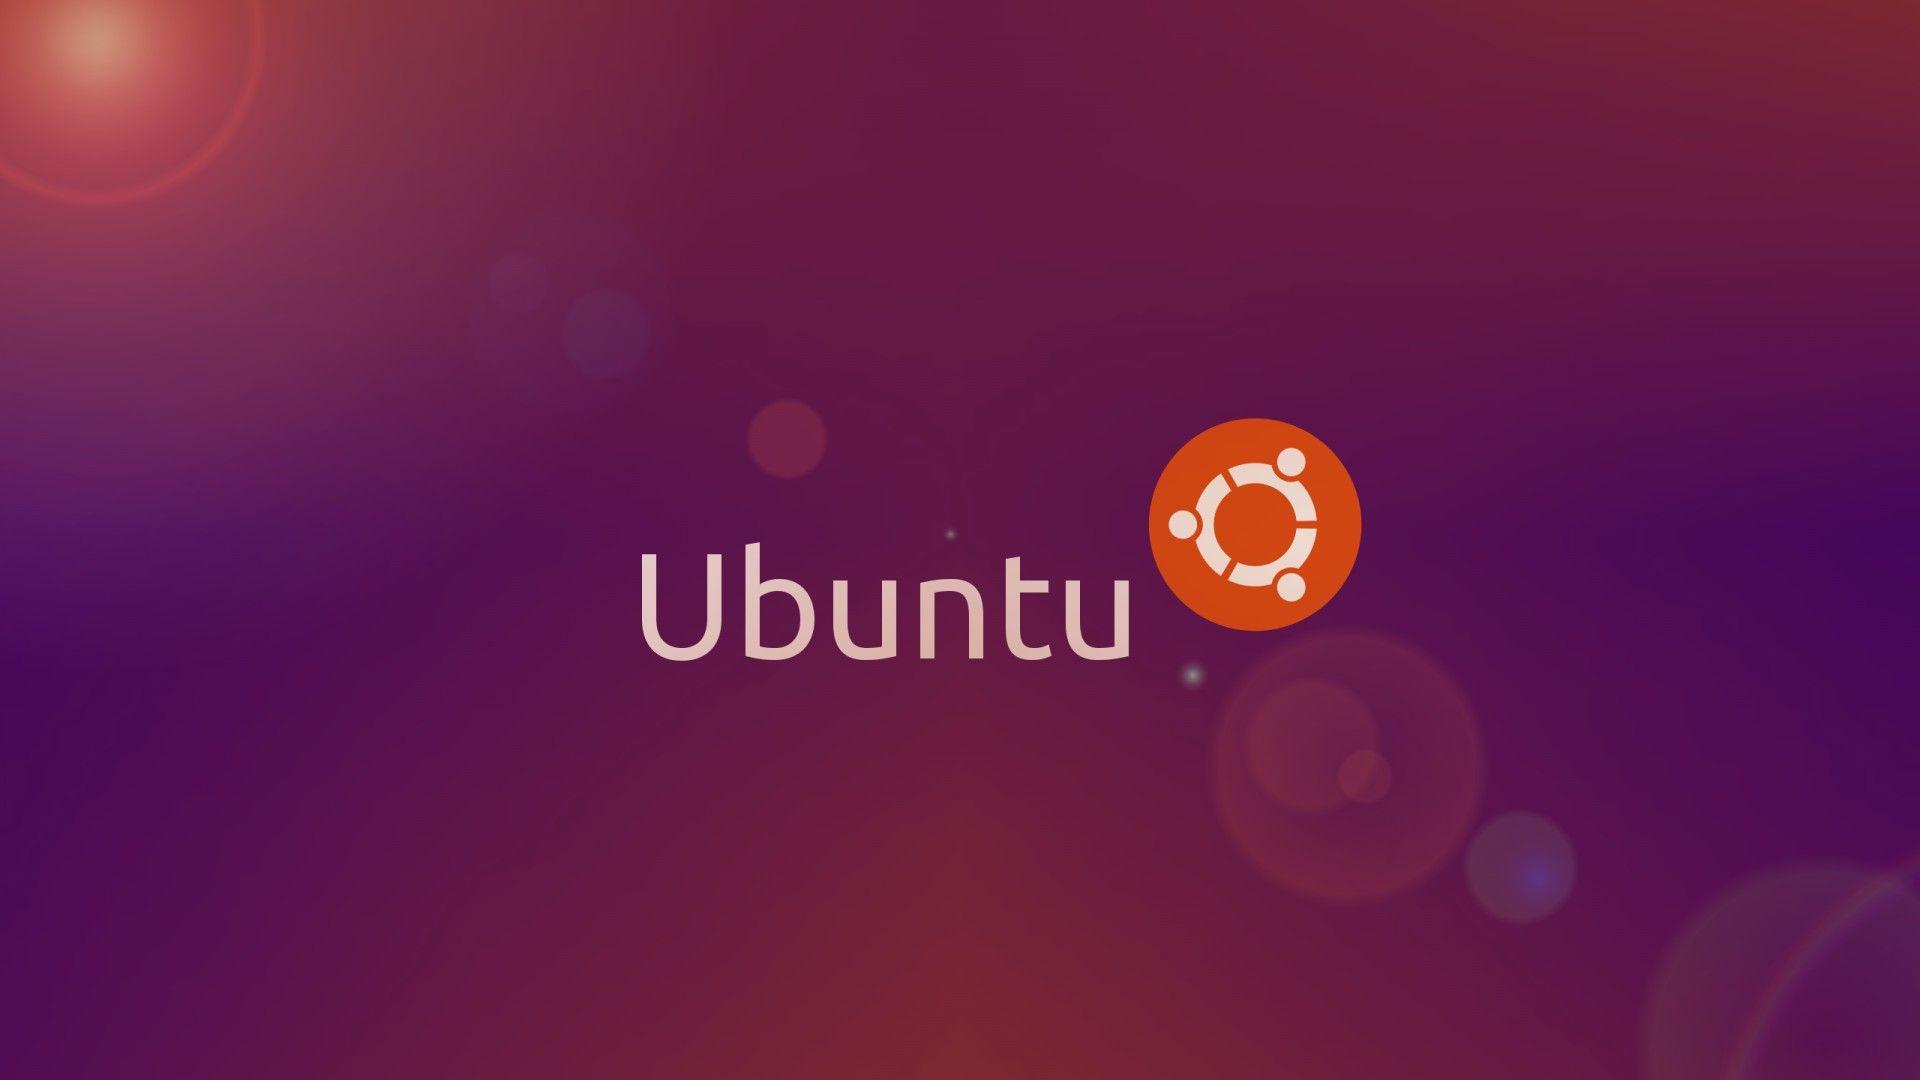 a speech about ubuntu